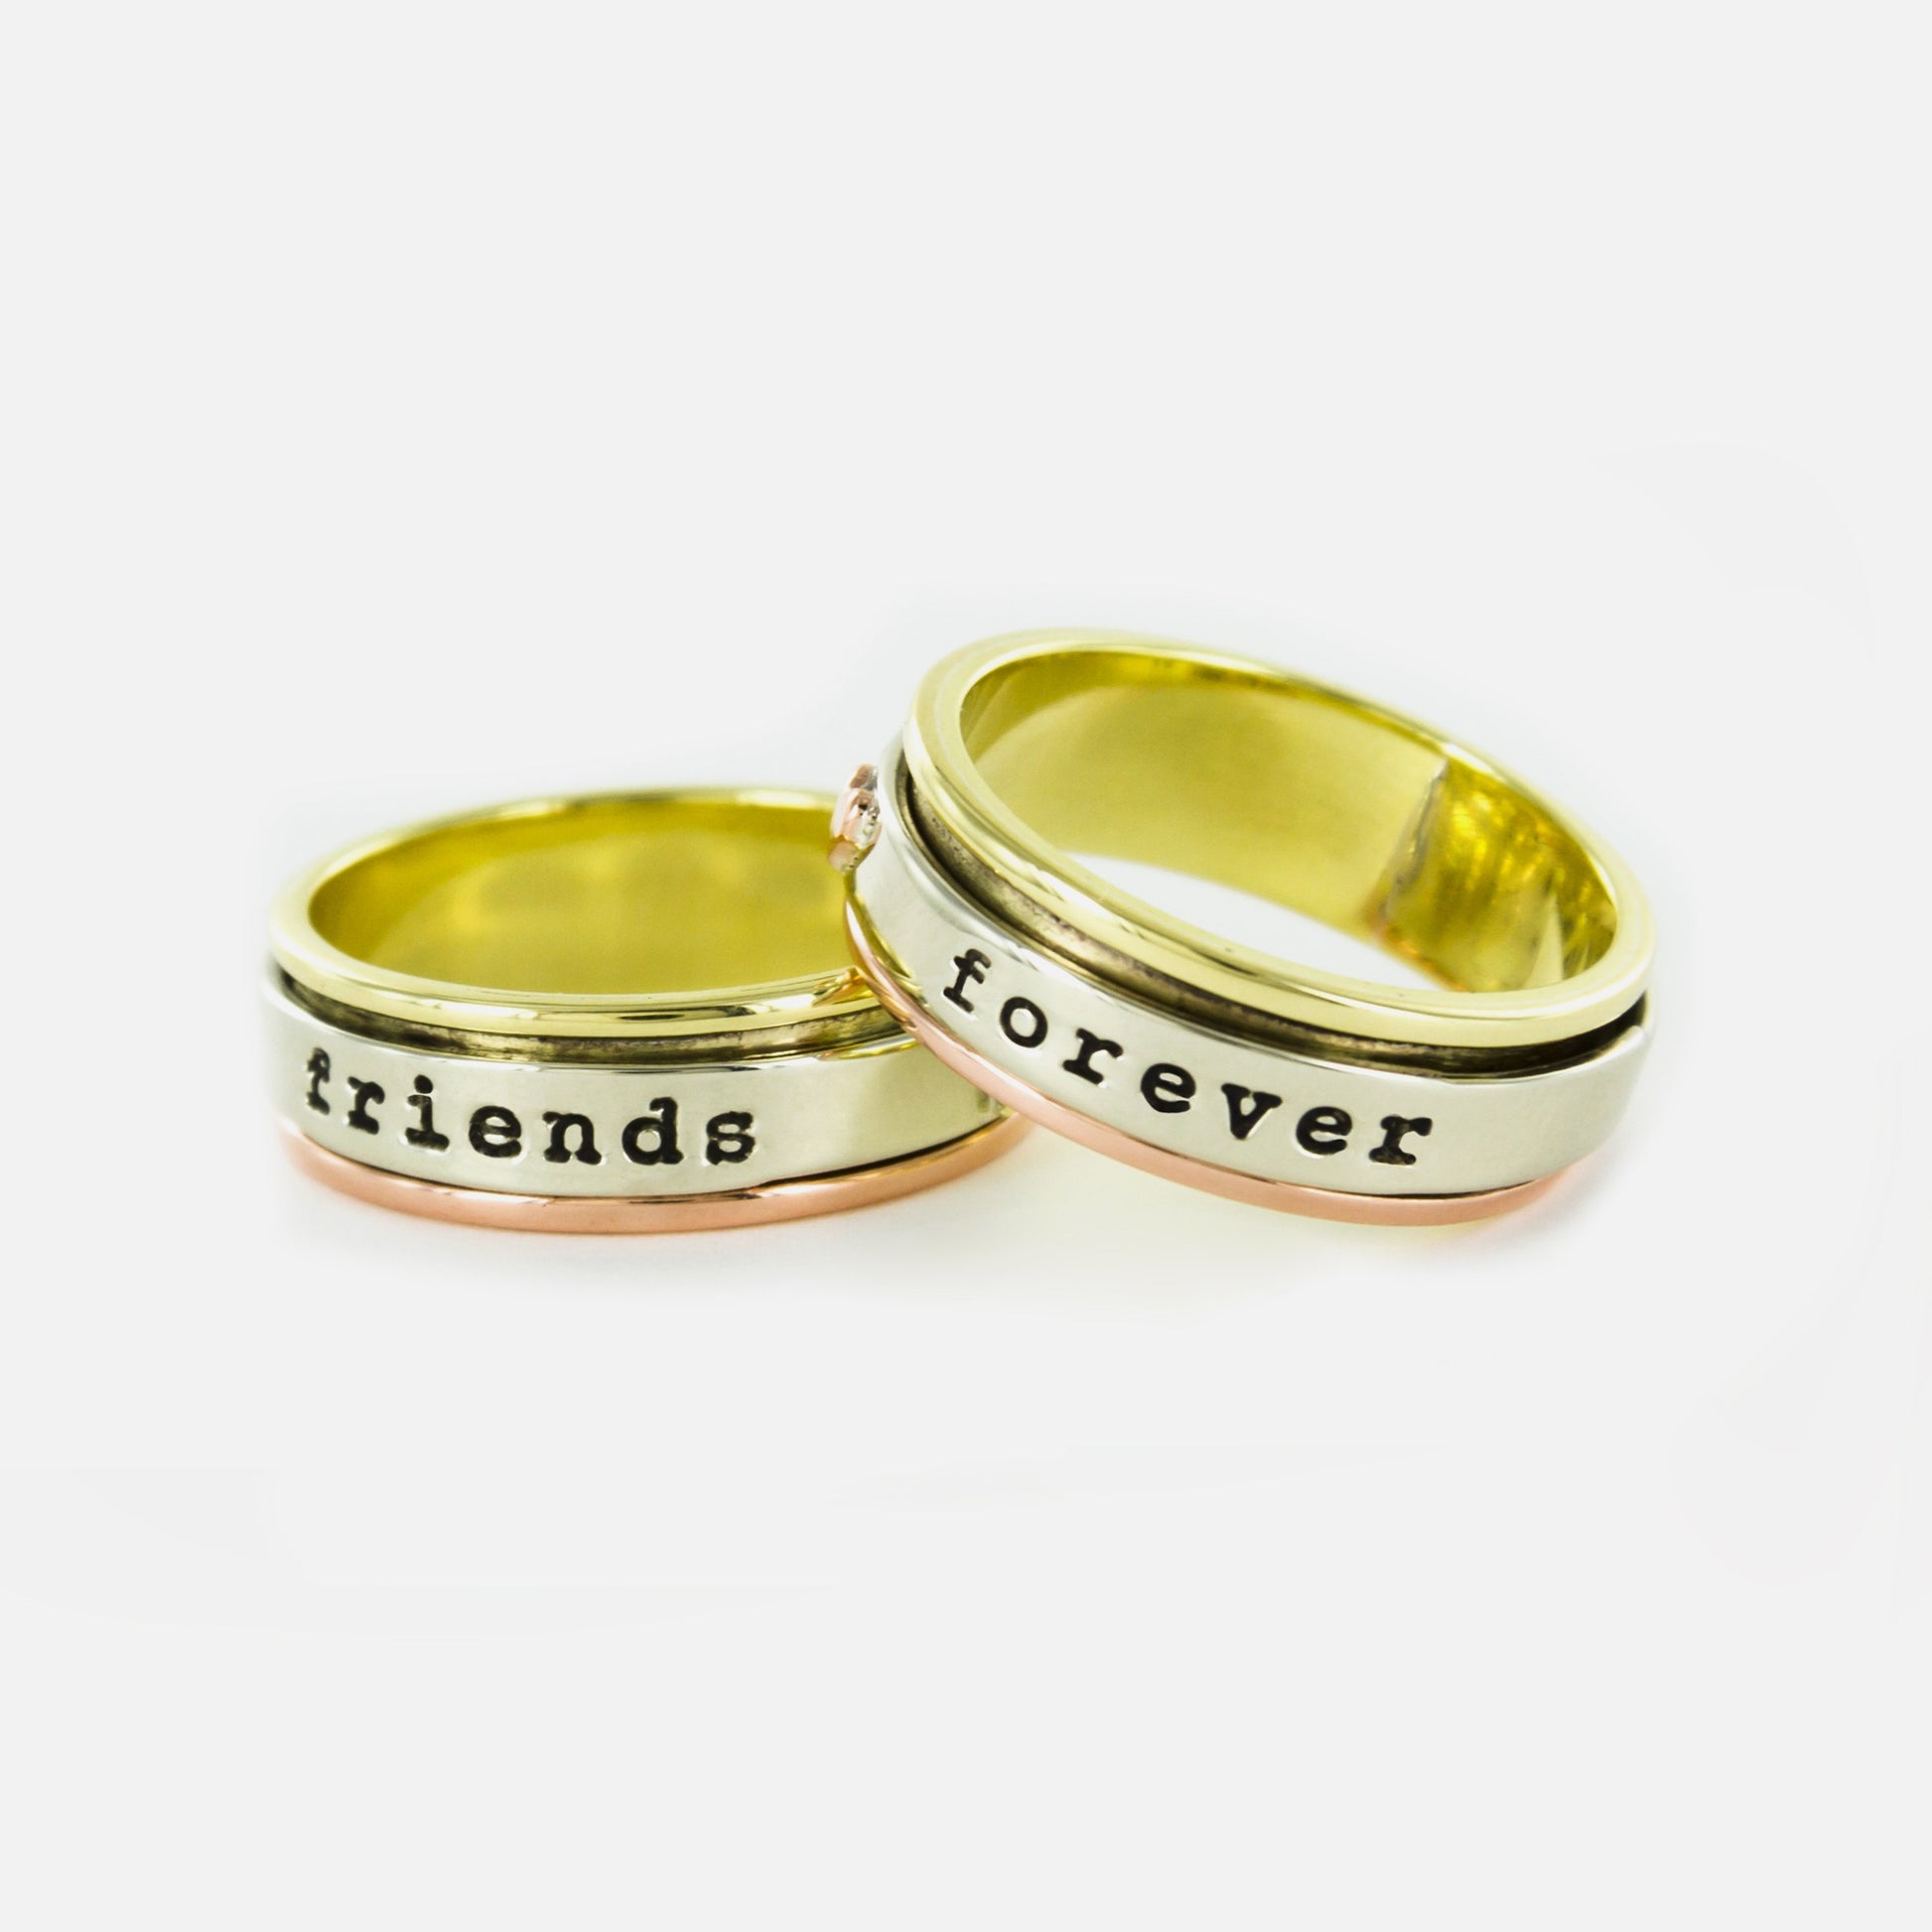 Friends Forever Sterling Brass & Copper Spinning Ring